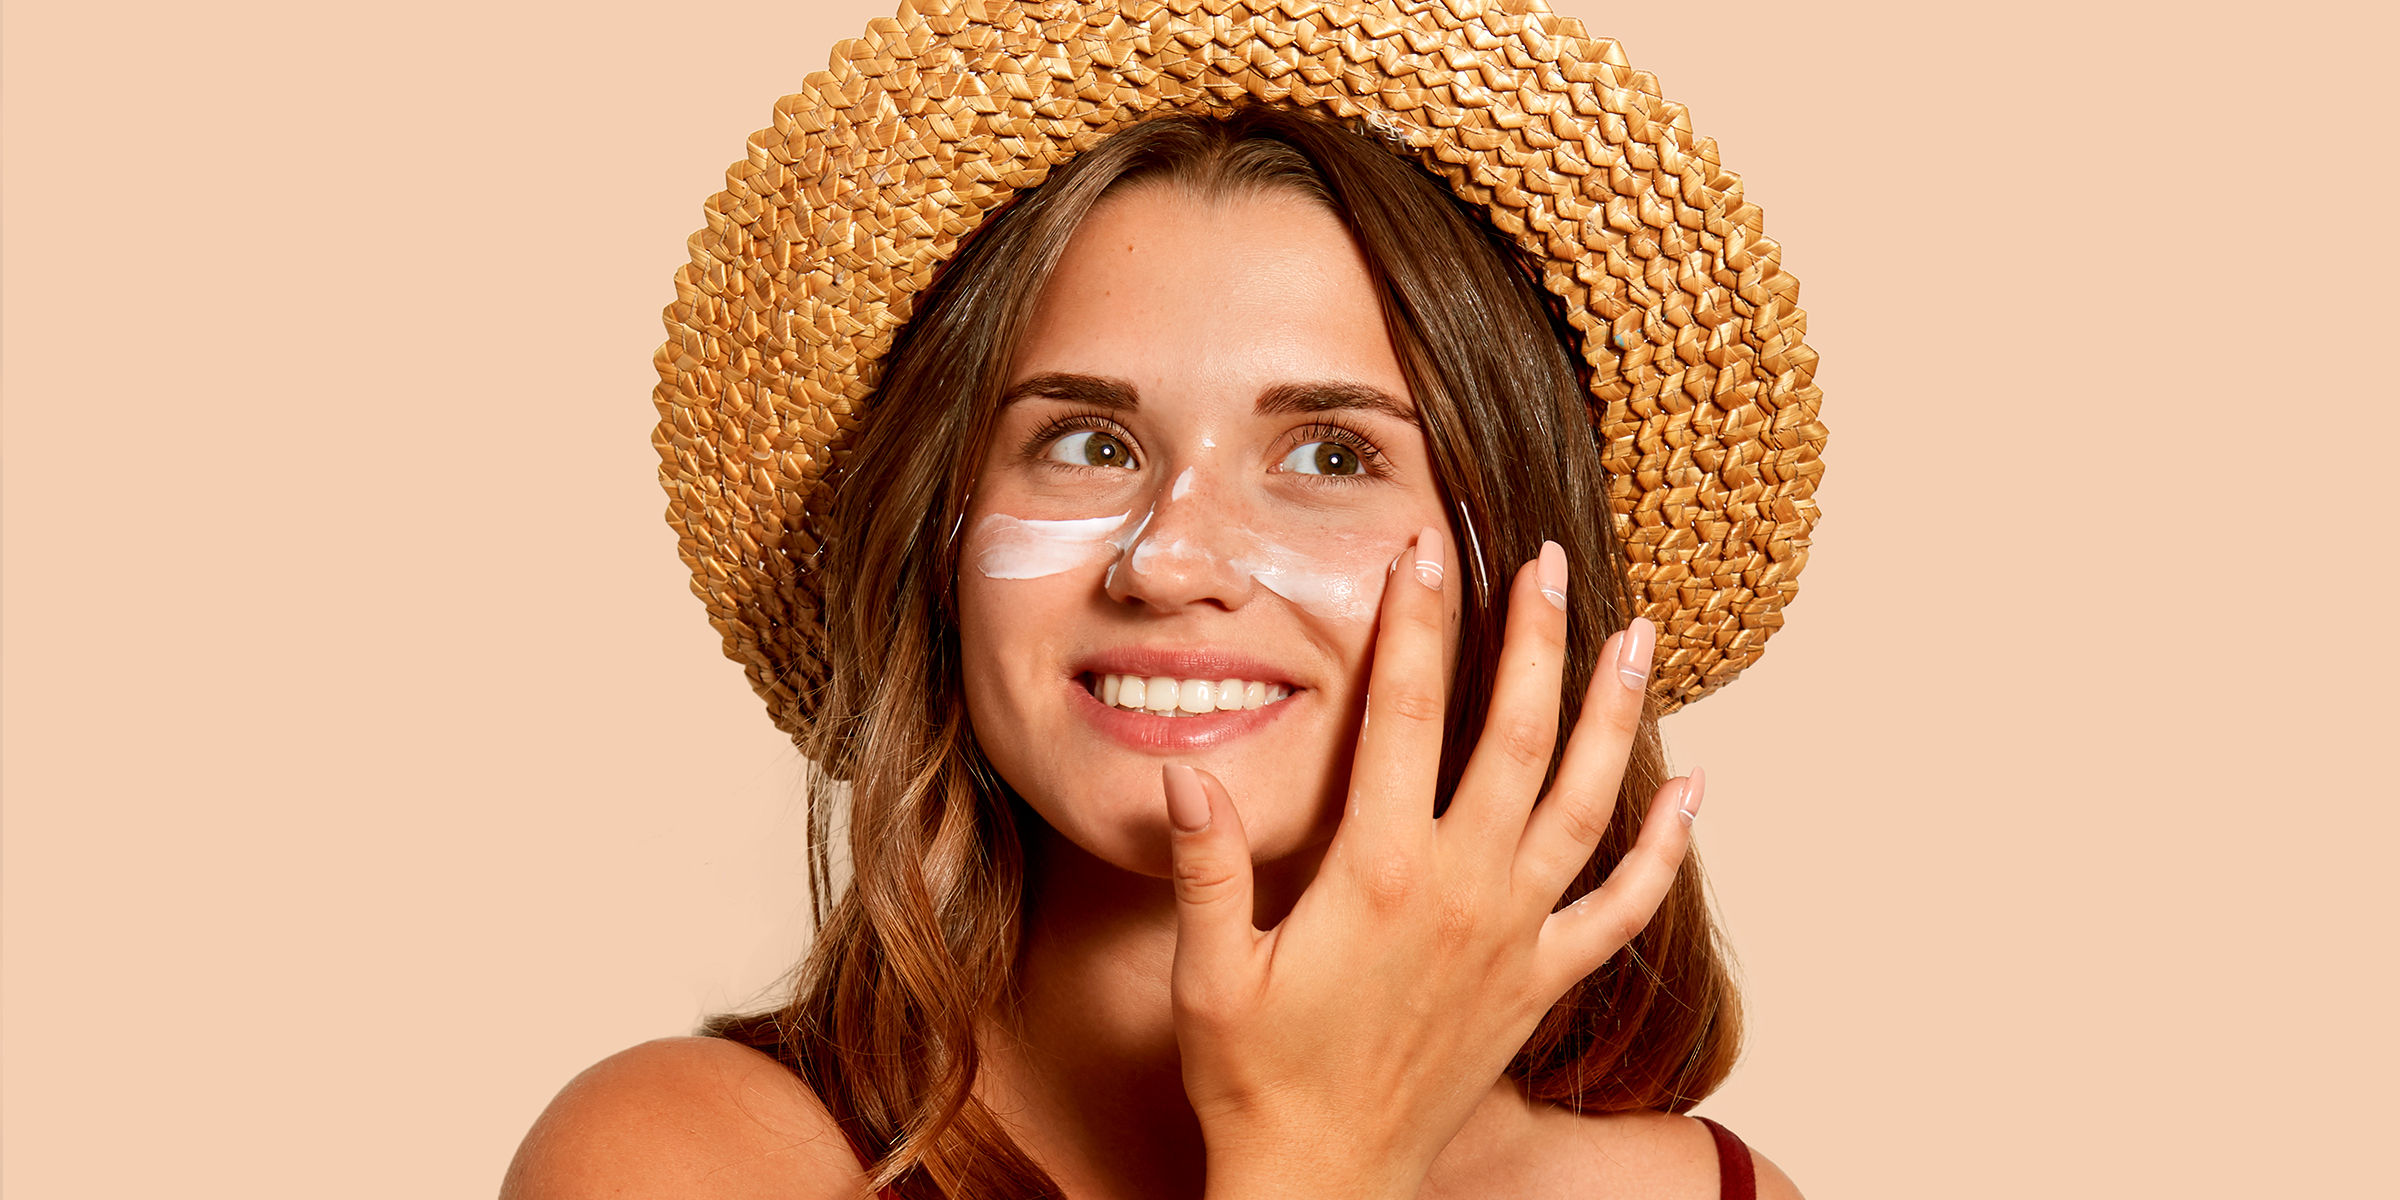 Woman Applying Sunscreen on Her Face | Source: Shutterstock